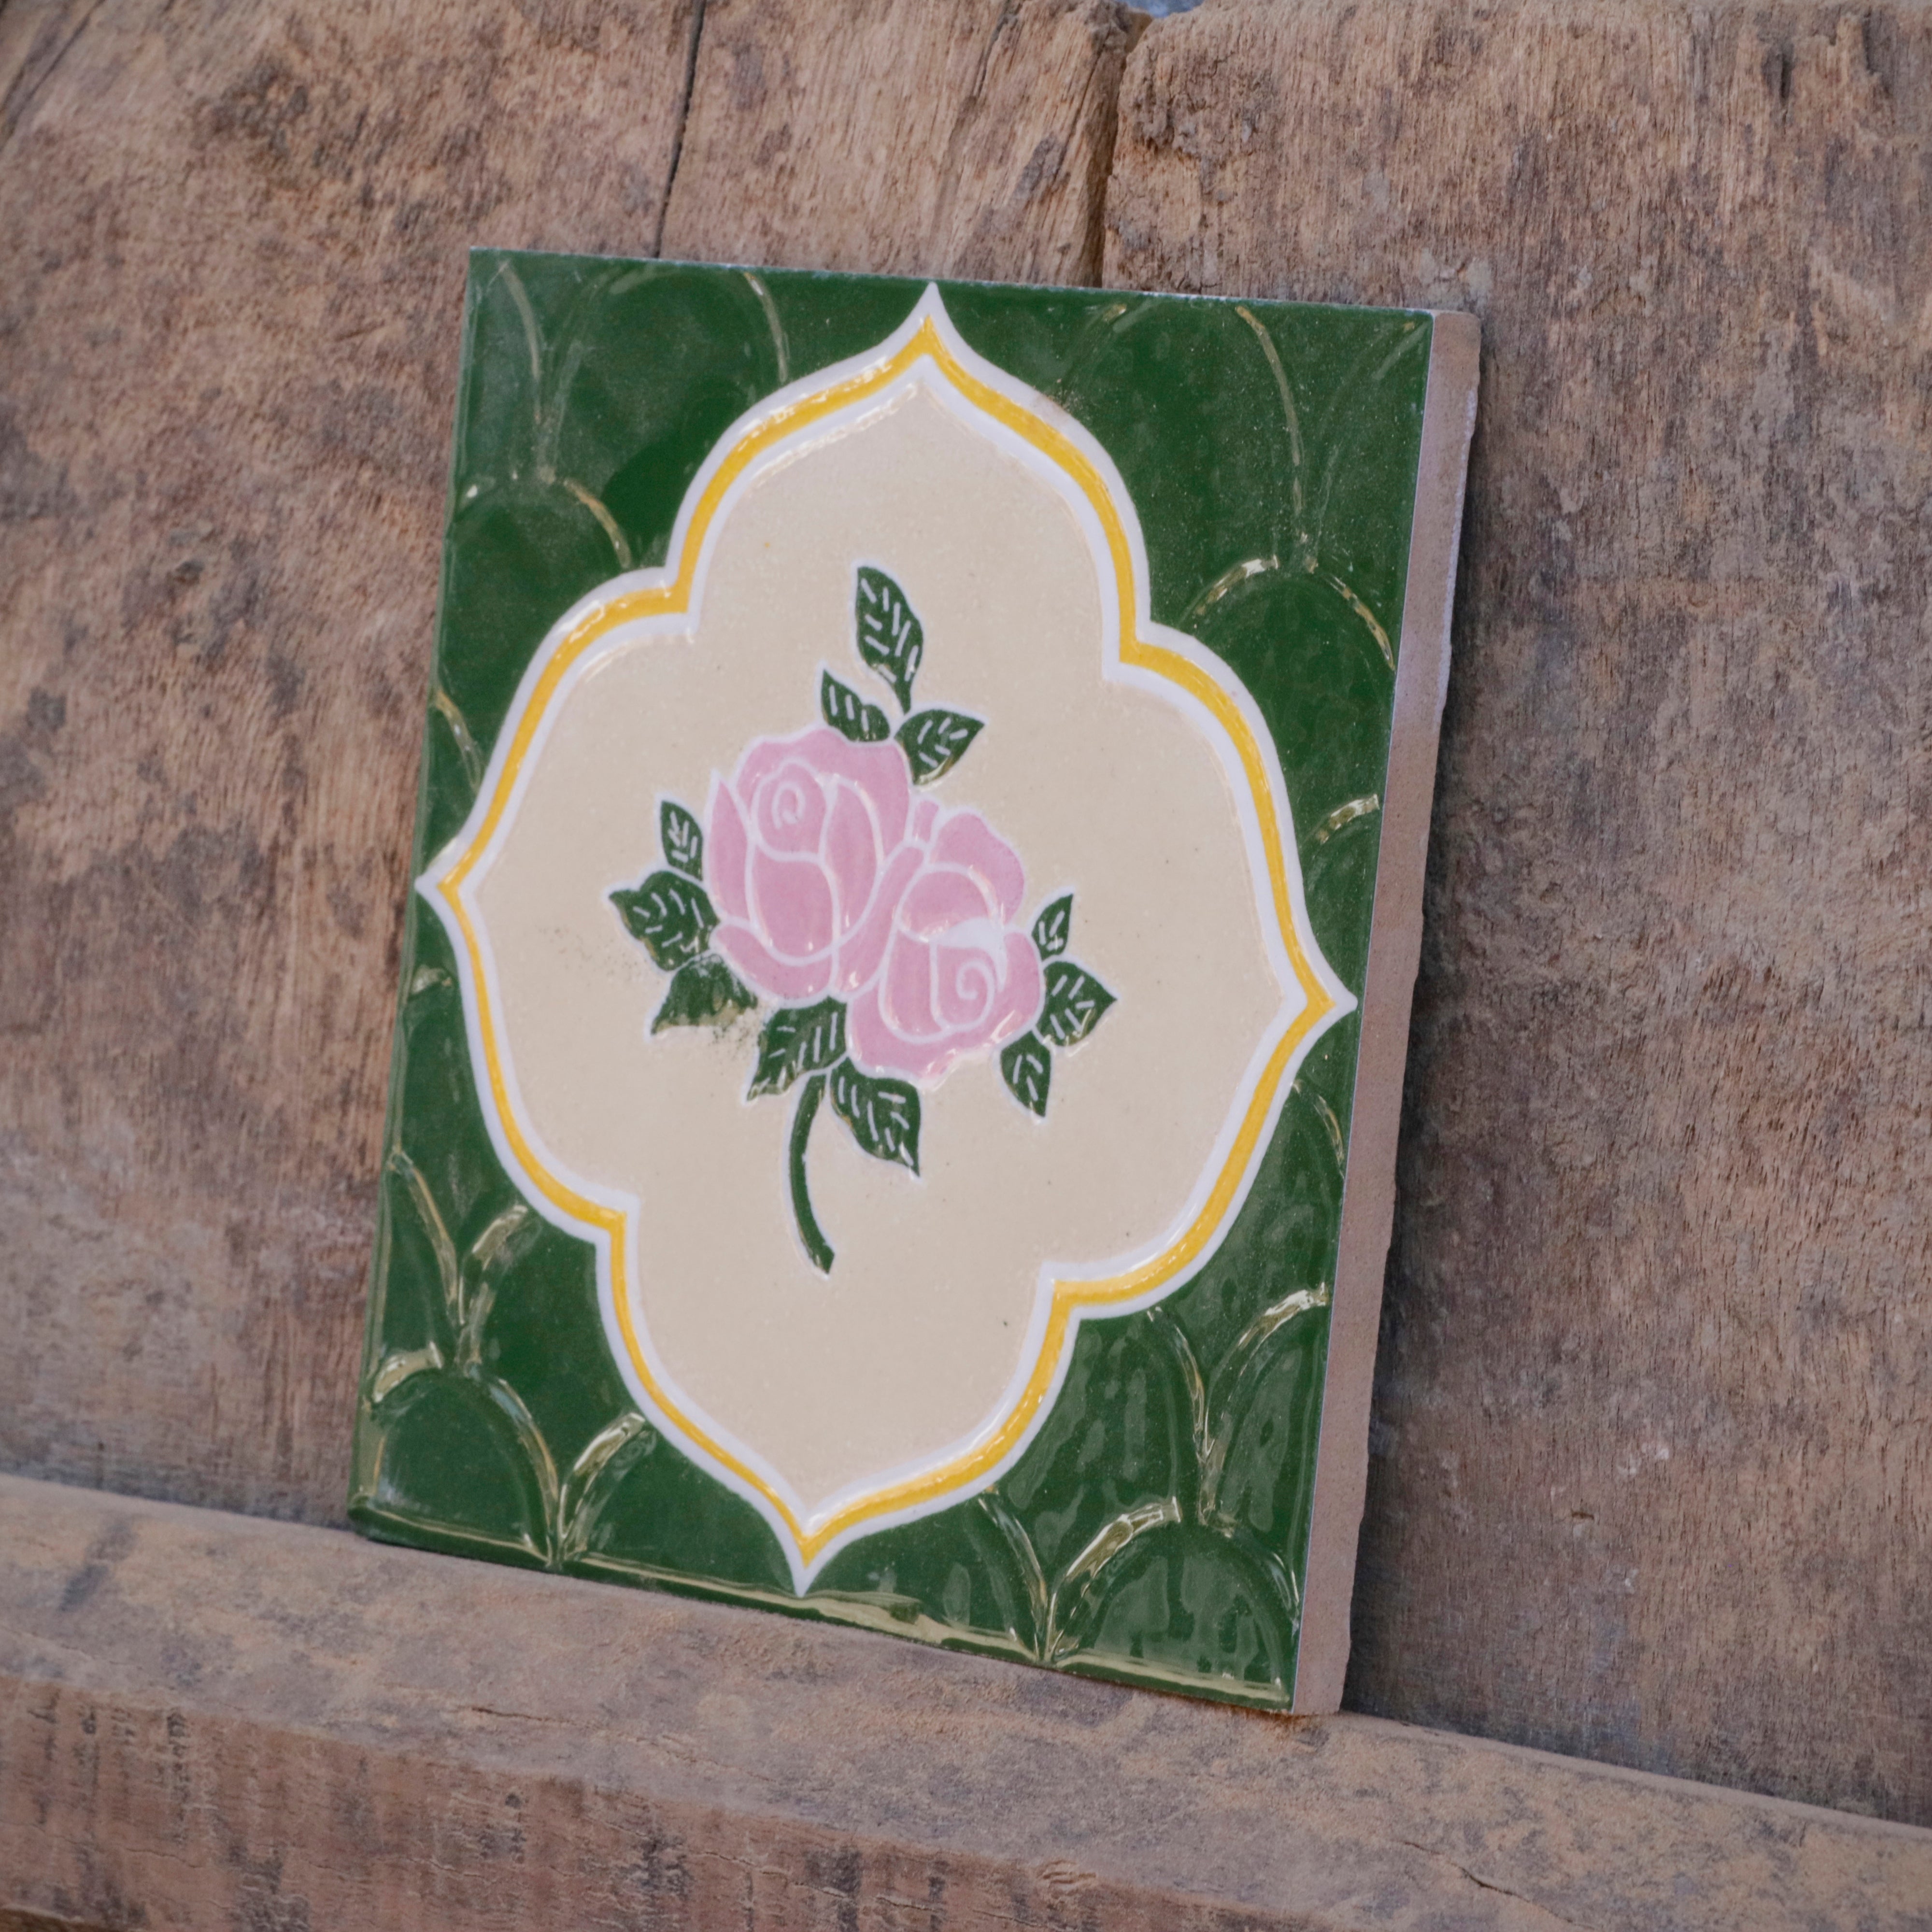 Southern Simple Flowere Designed Ceramic Square Tile Ceramic Tile